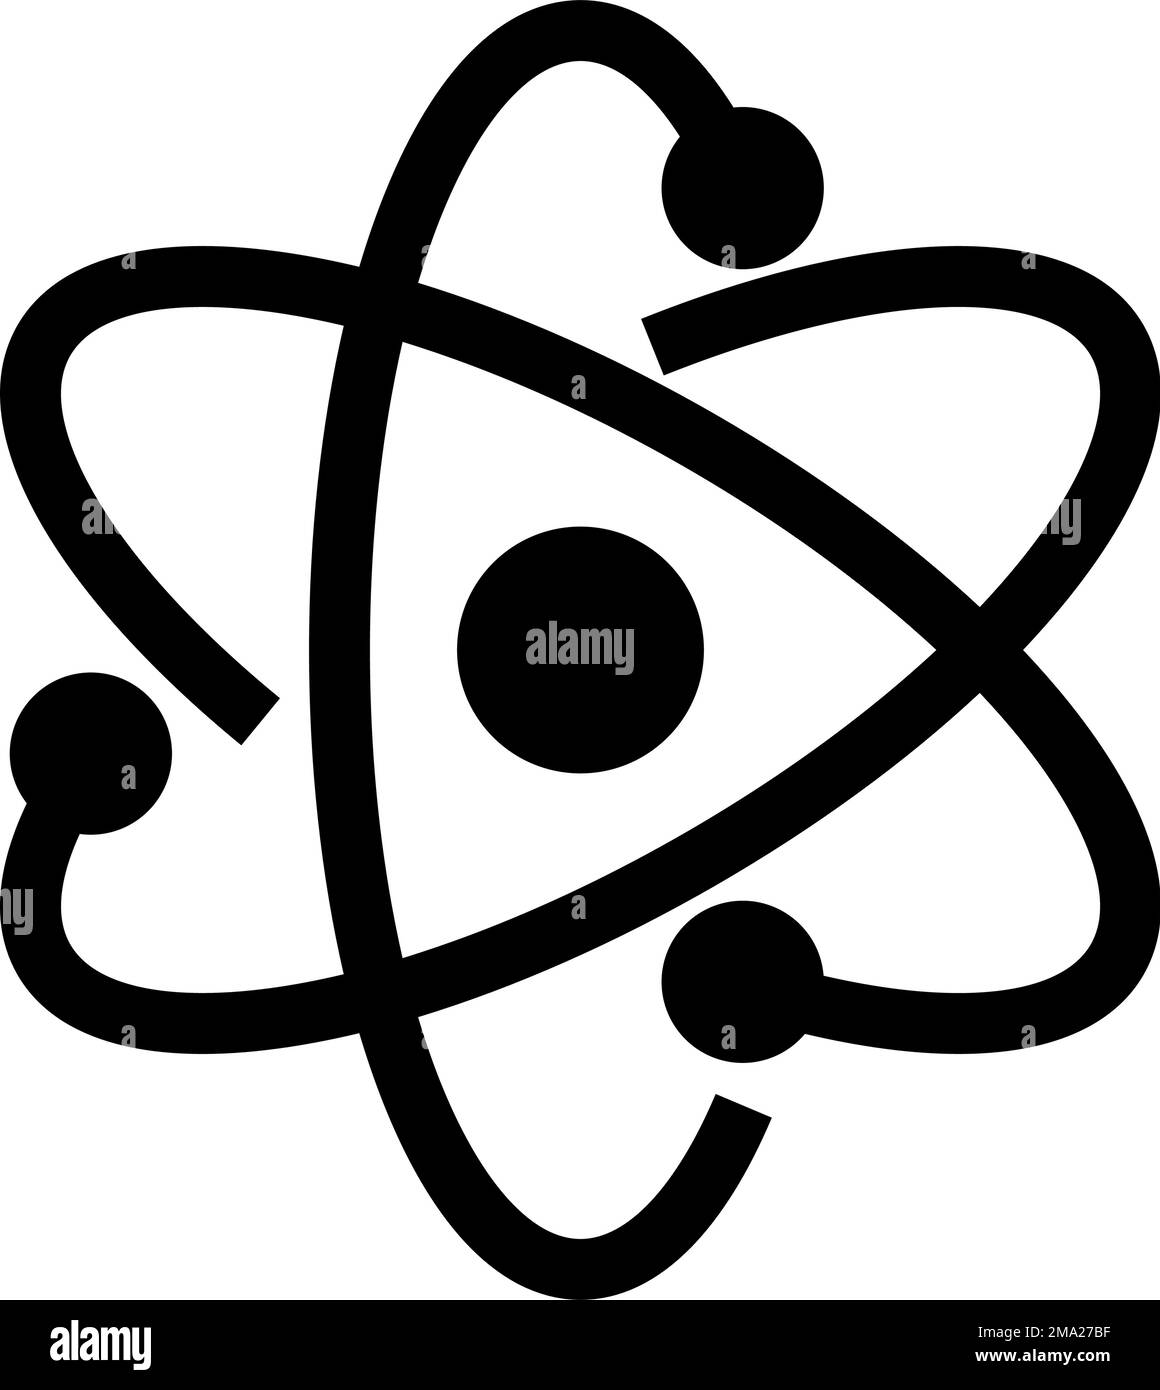 Atom silhouette icon with nucleus. Editable vector. Stock Vector